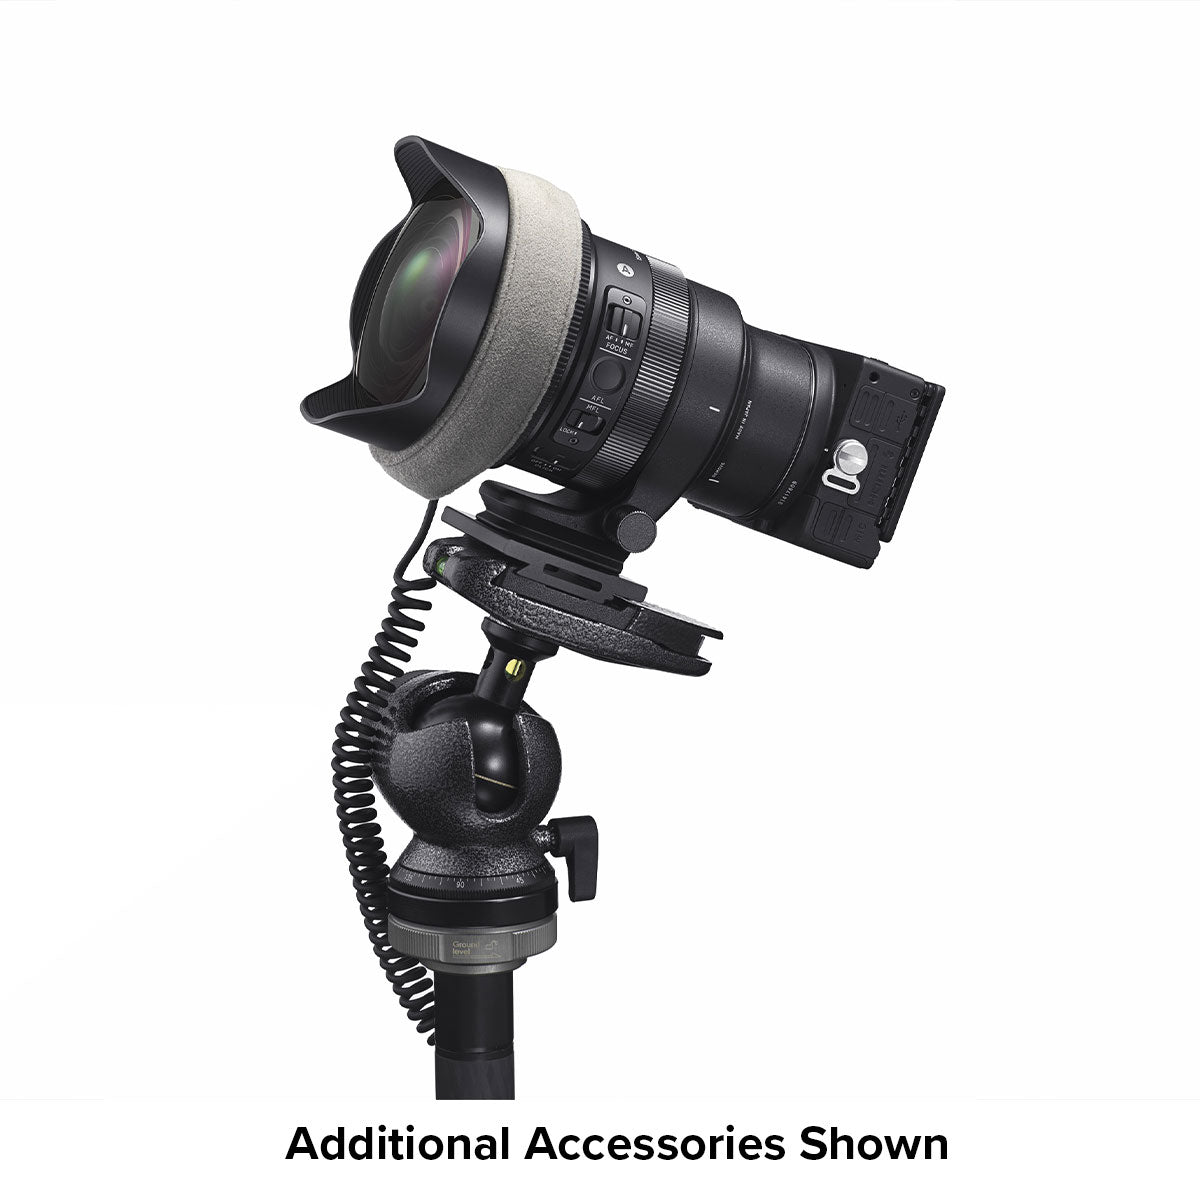 Sigma 15mm f/1.4 Fisheye DG DN Art Lens for Sony FE